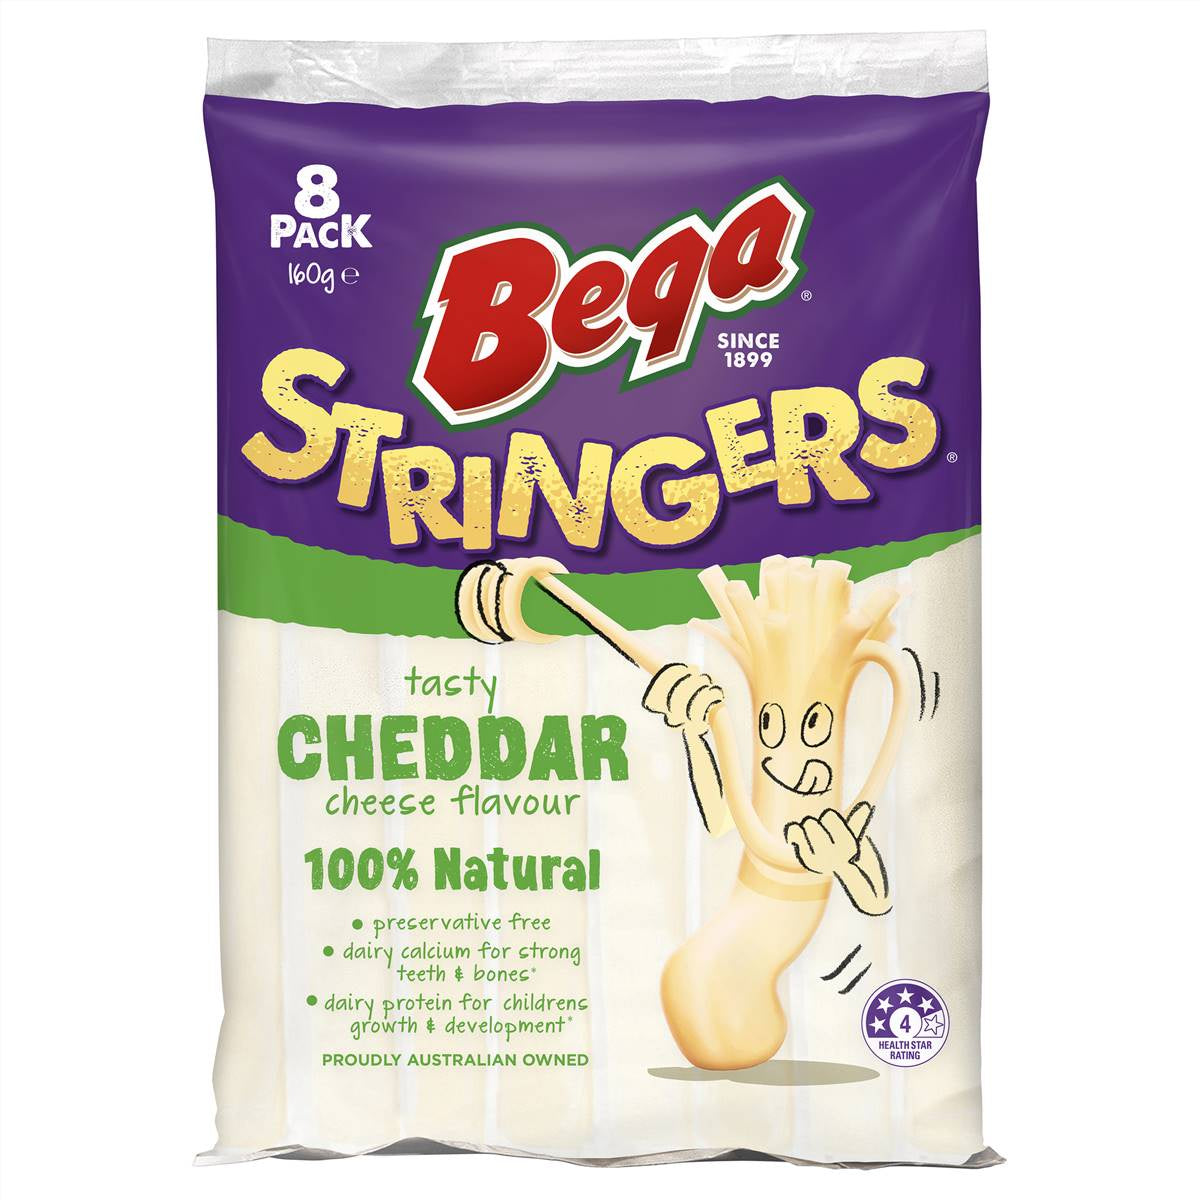 Bega Stringers Cheddar Cheese 8pk